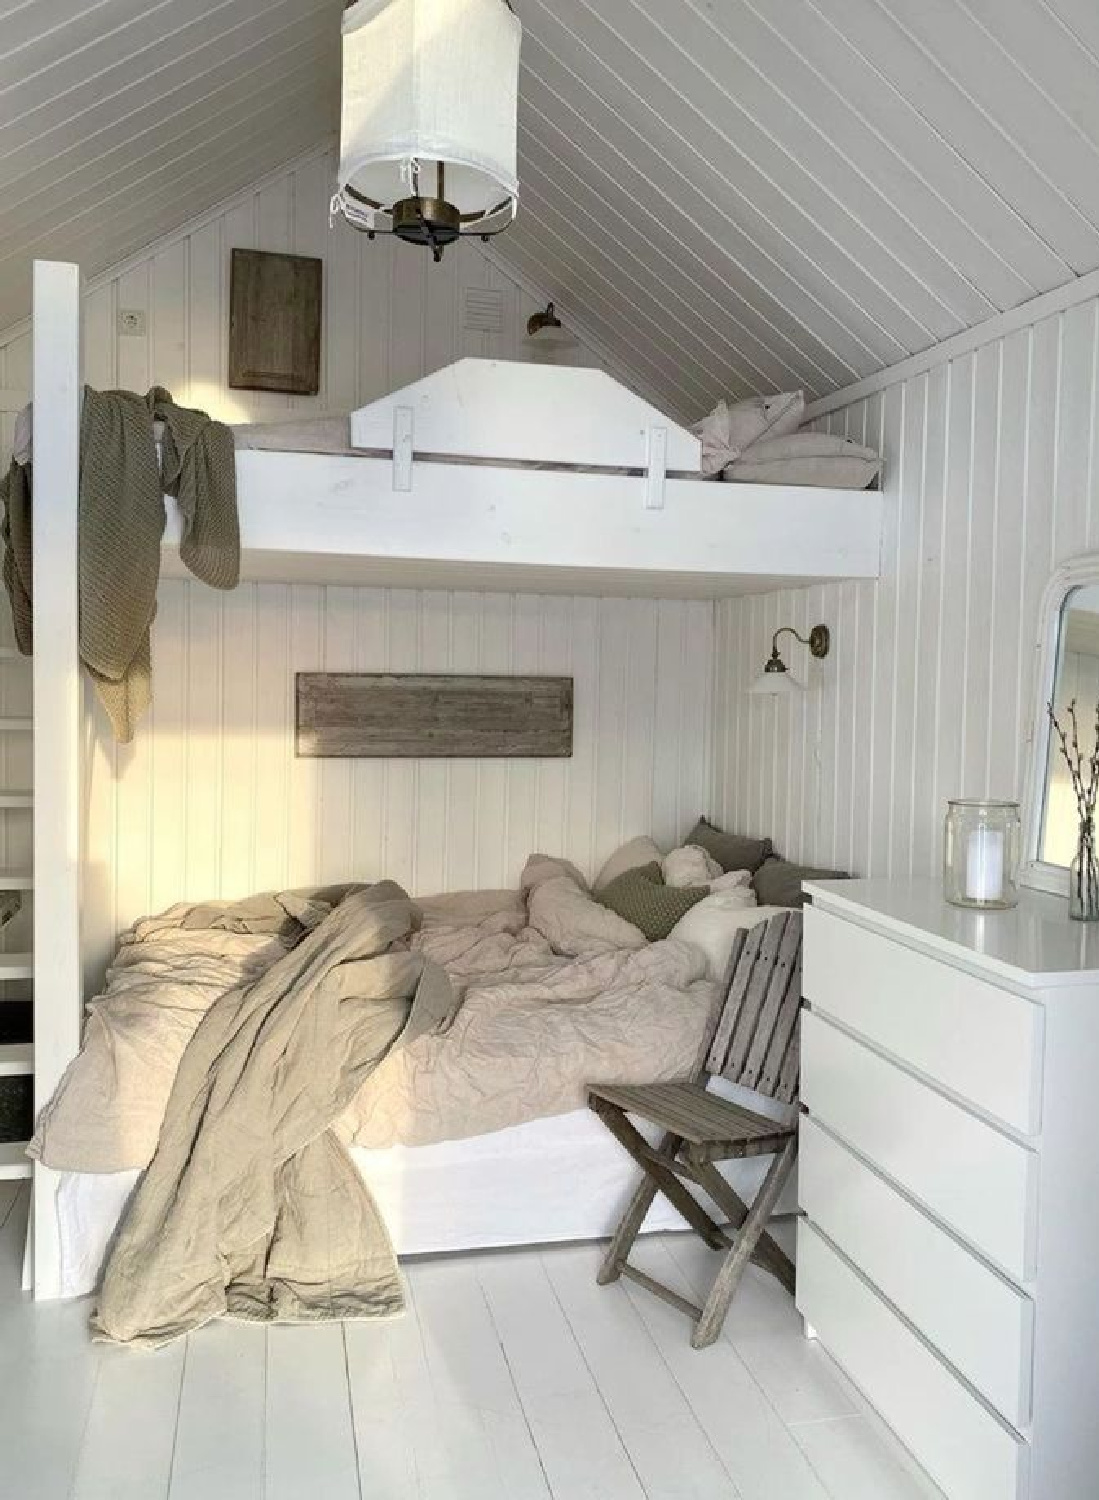 Built-in bunks in a cozy white Scandi bedroom - via Alma Wimmergren. #scandistyle #cozybedrooms #bunkrooms